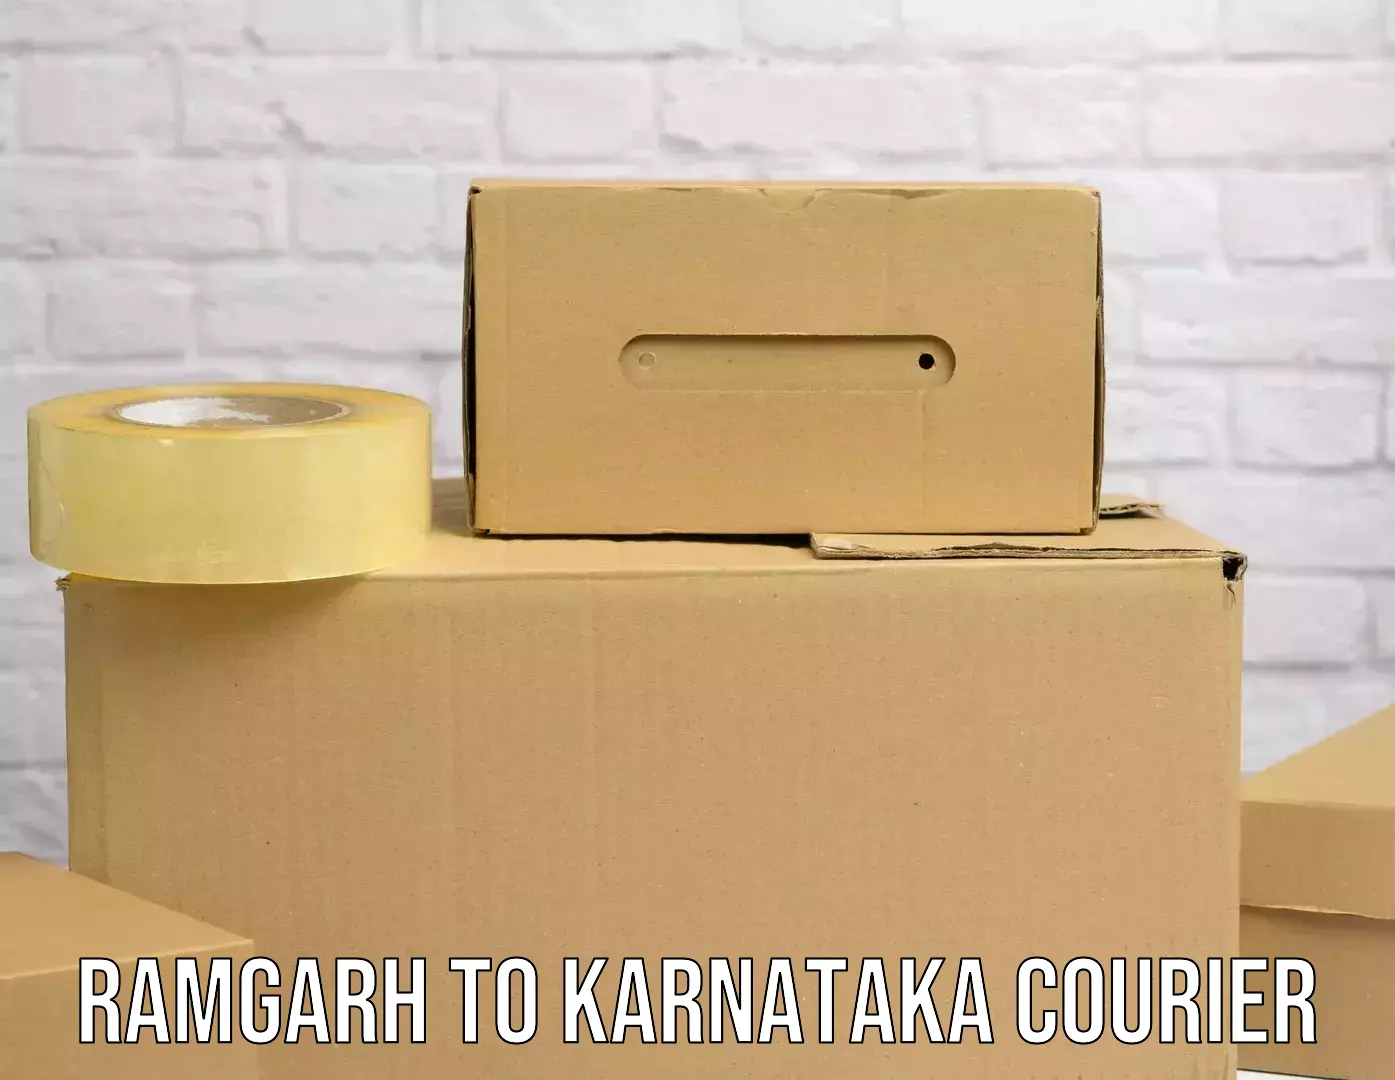 Pharmaceutical courier Ramgarh to Karnataka